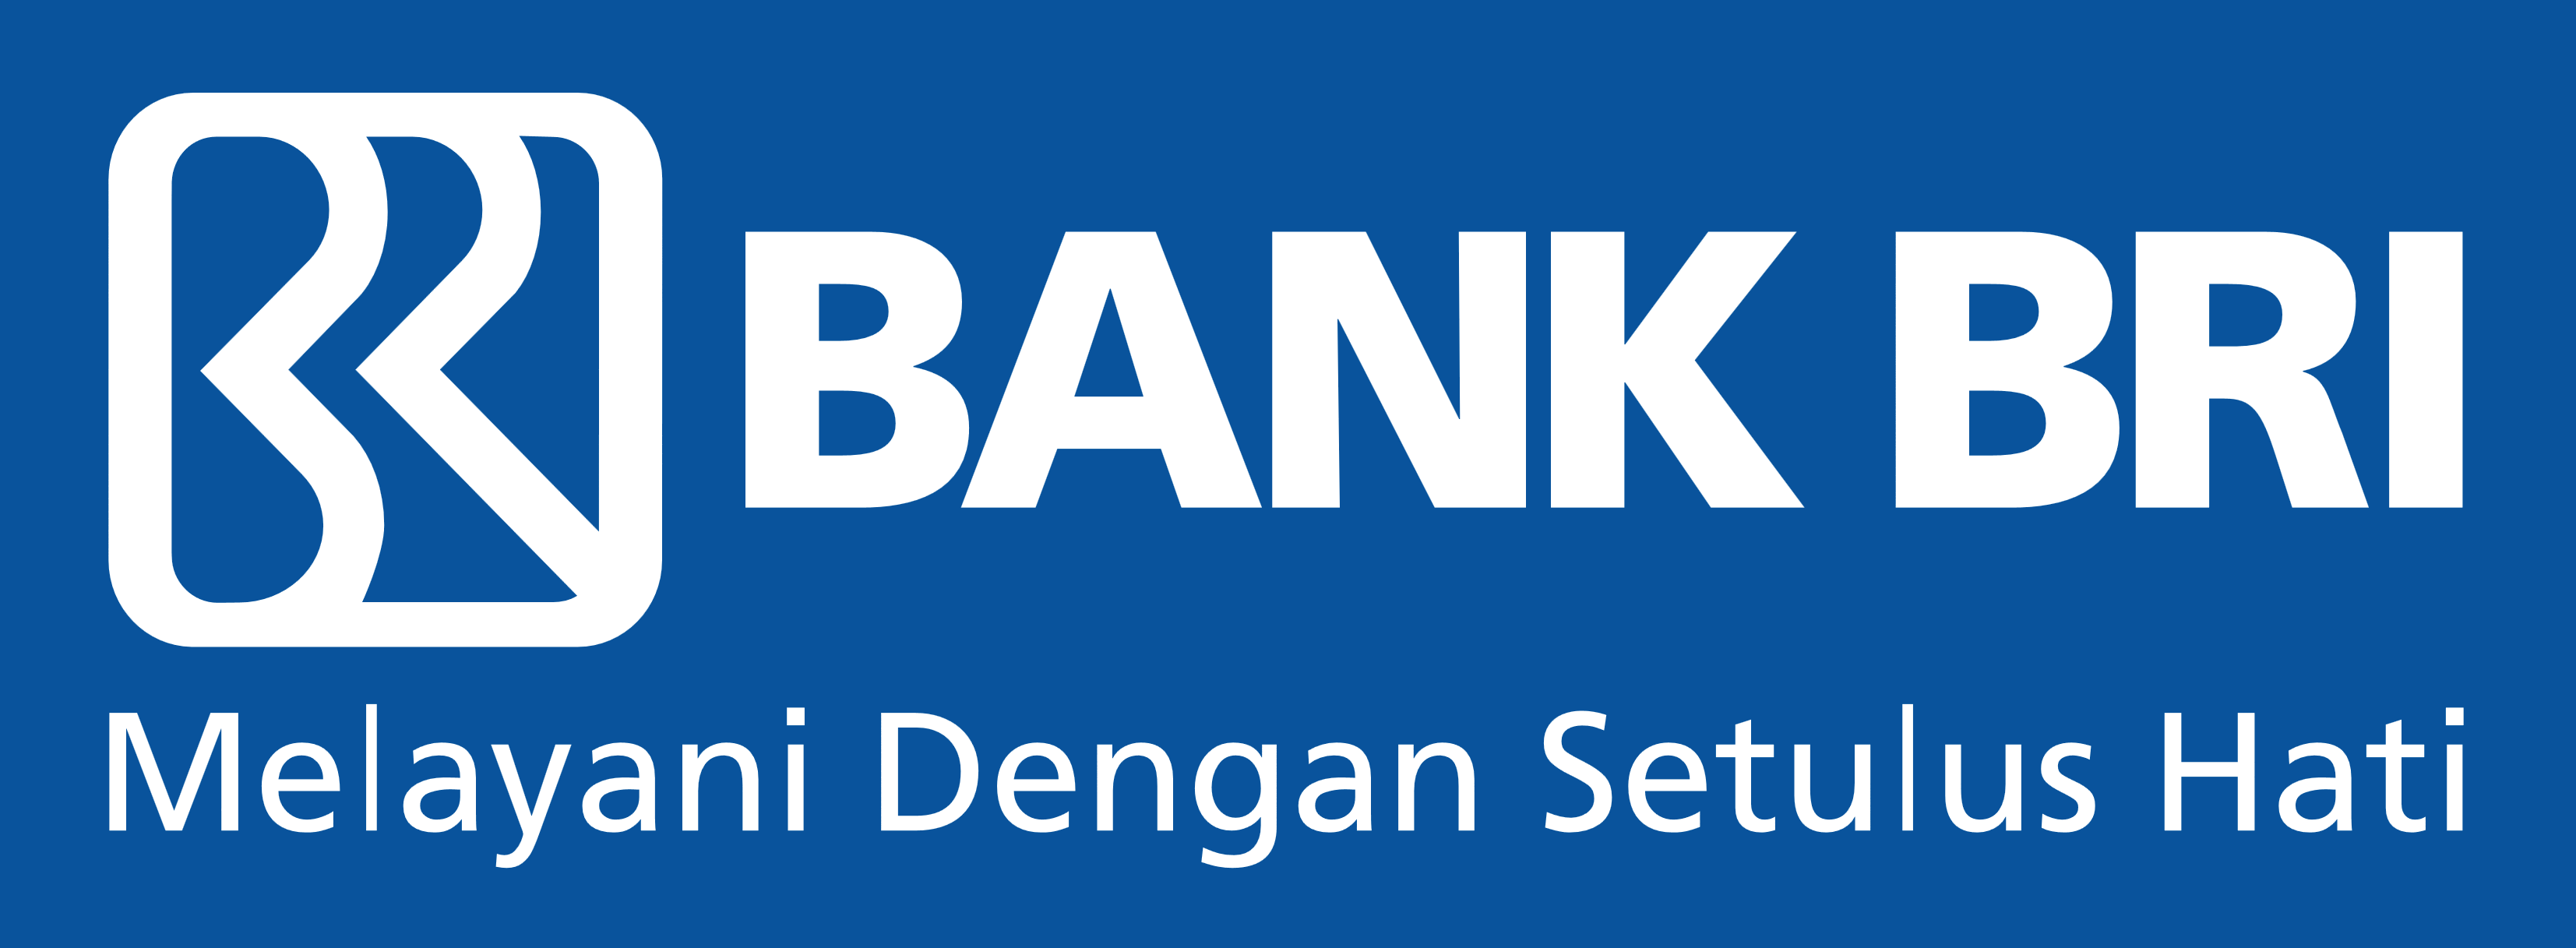 bank-bri-bank-rakyat-indonesia-logos-download